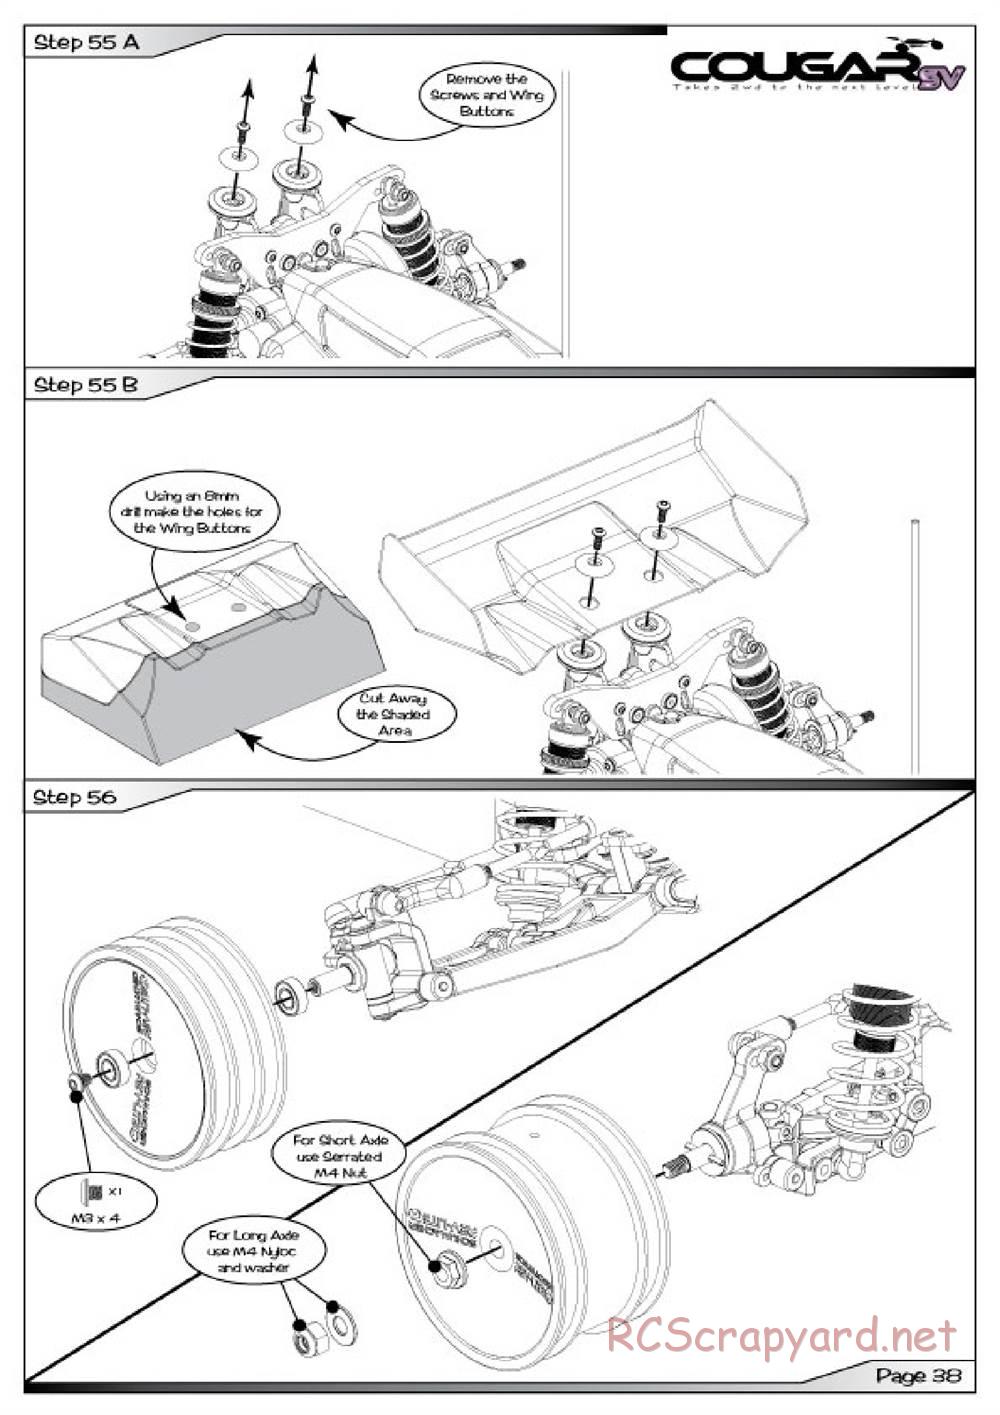 Schumacher - Cougar SV - Manual - Page 39